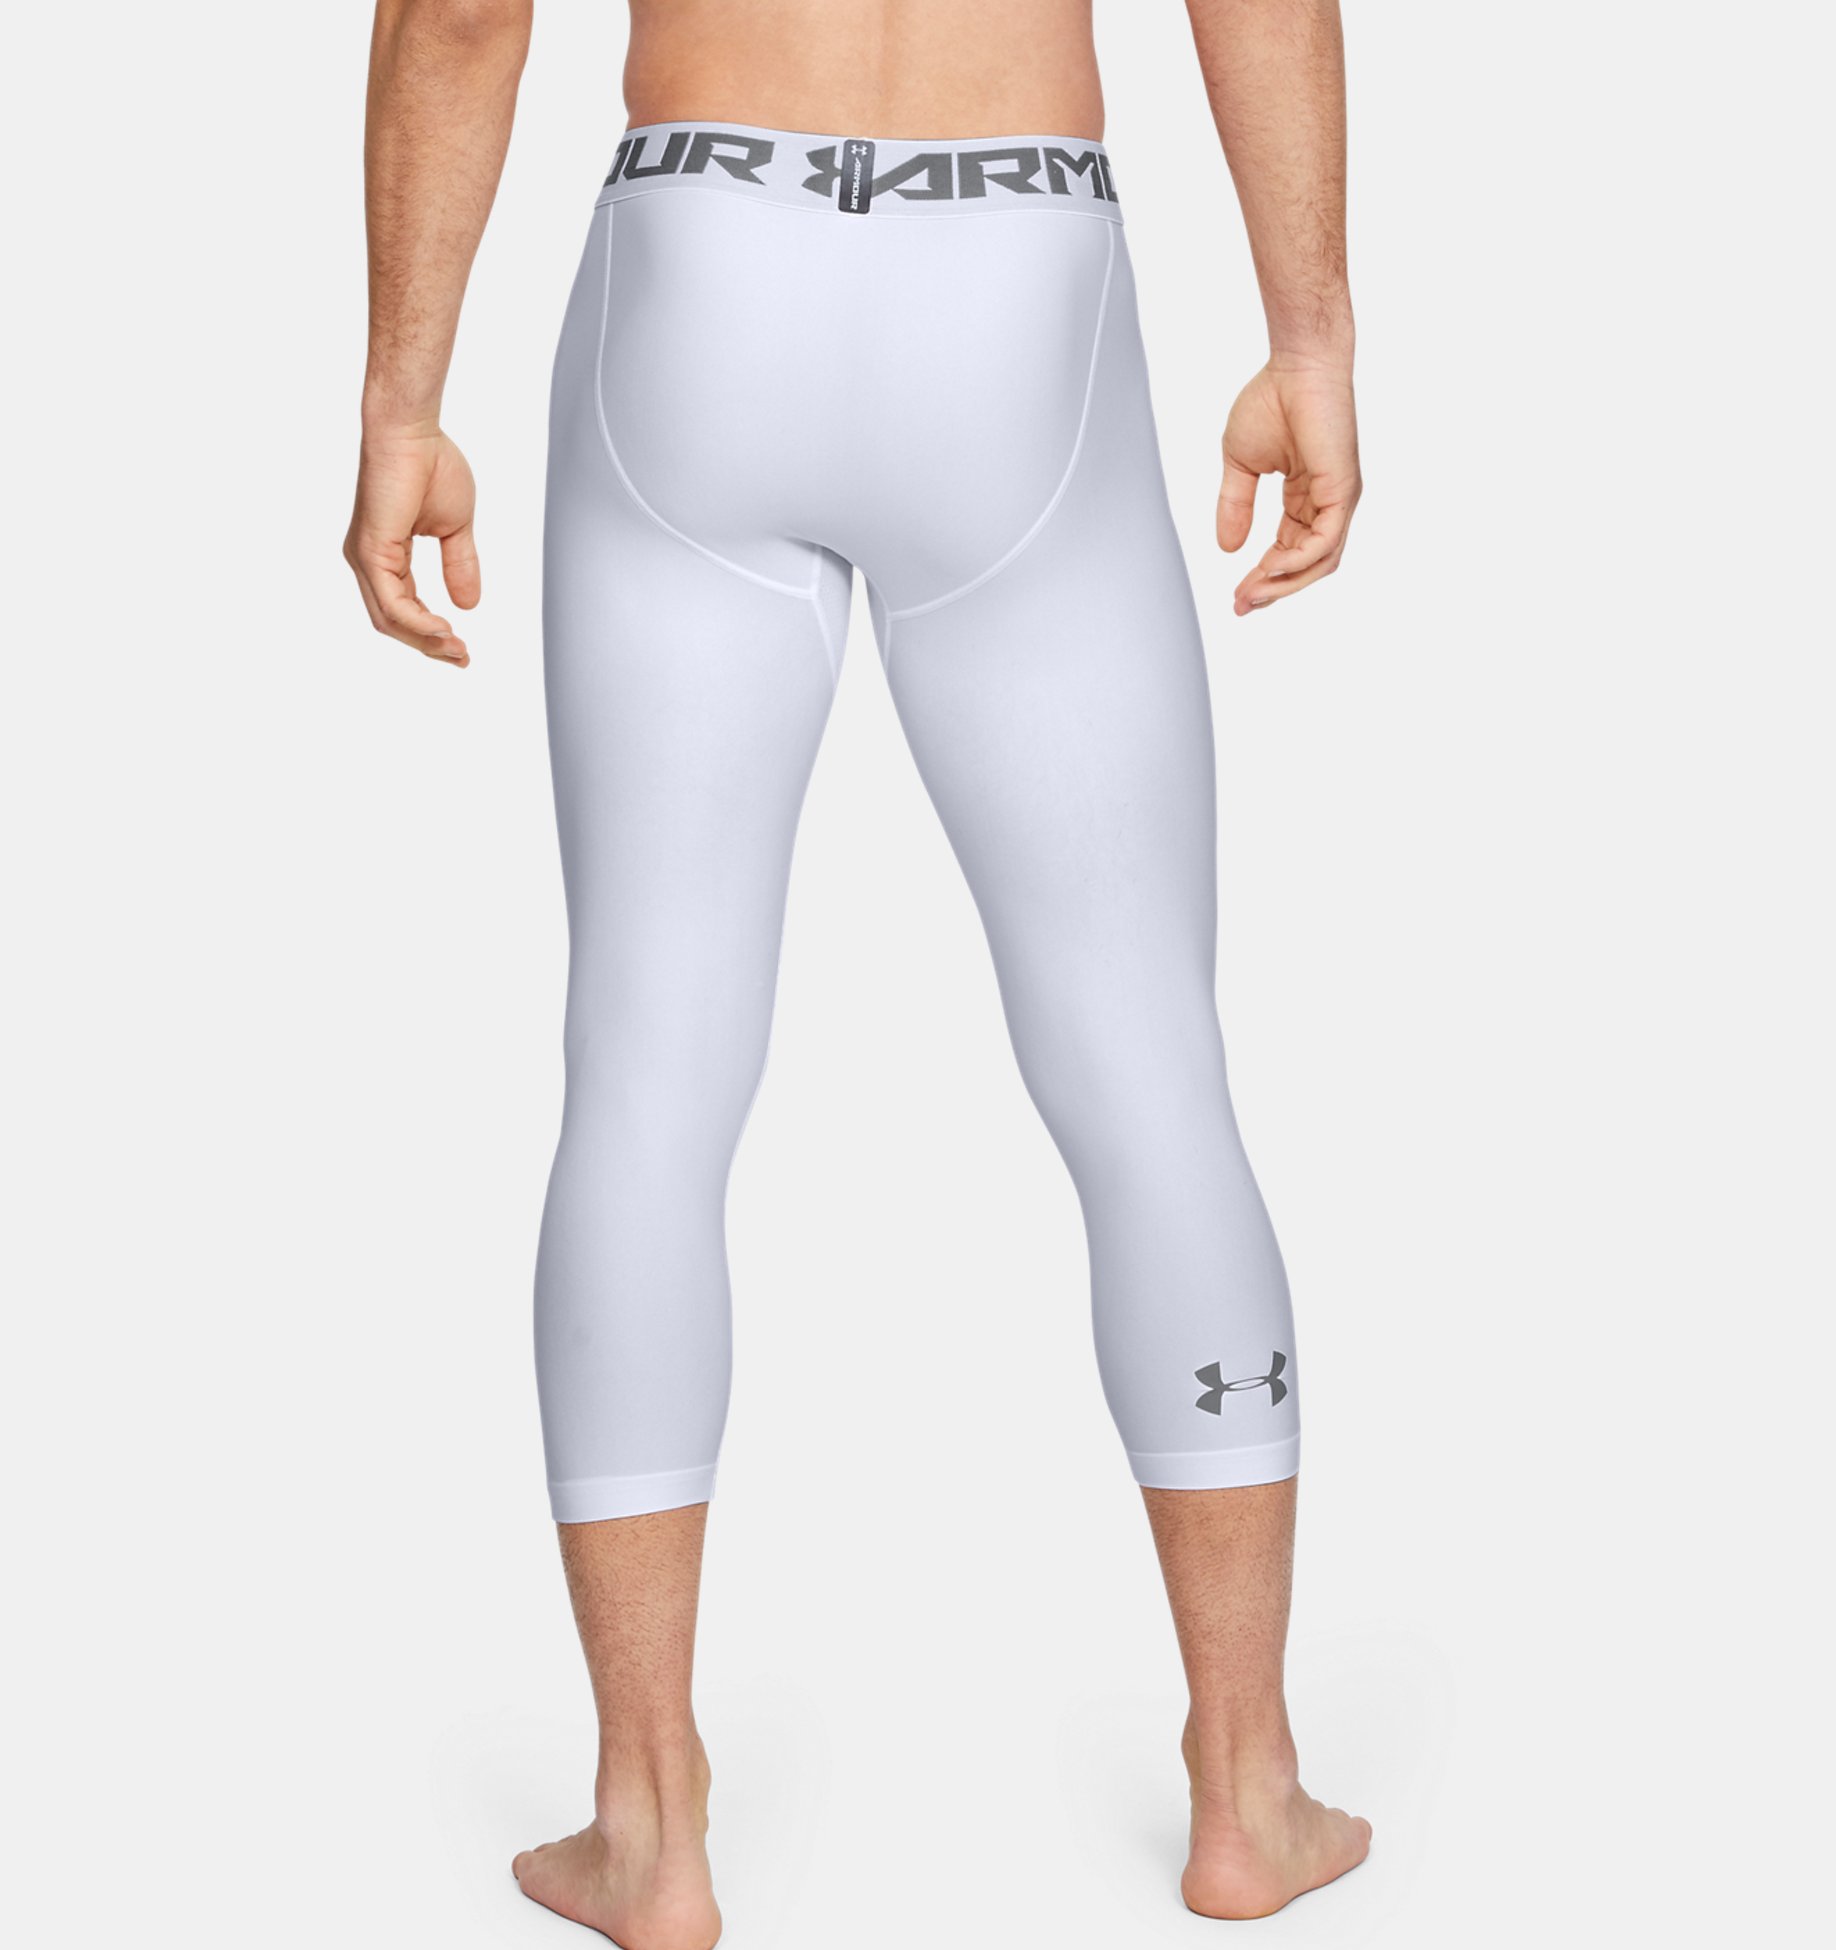 Mens Compression Tights Pants Shirt Set Skin Fit Base Layer Armor Yoga Gym Top 